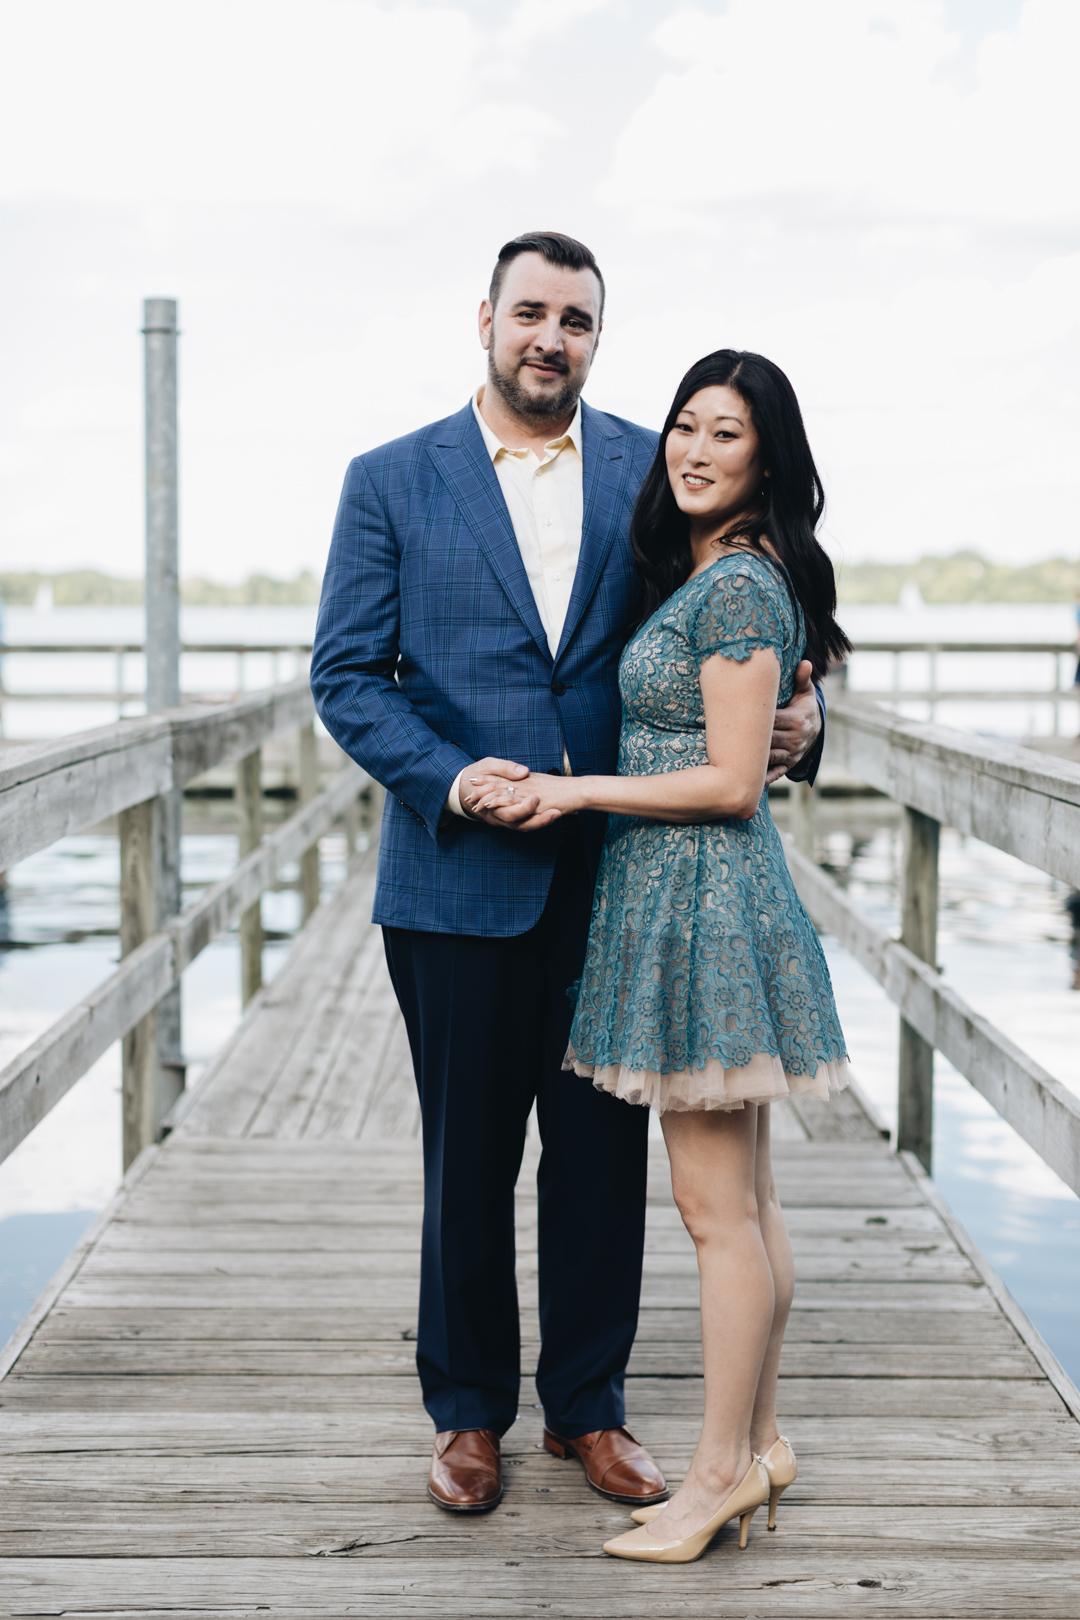 The Wedding Website of Lisa Malmgren and Elias Russell